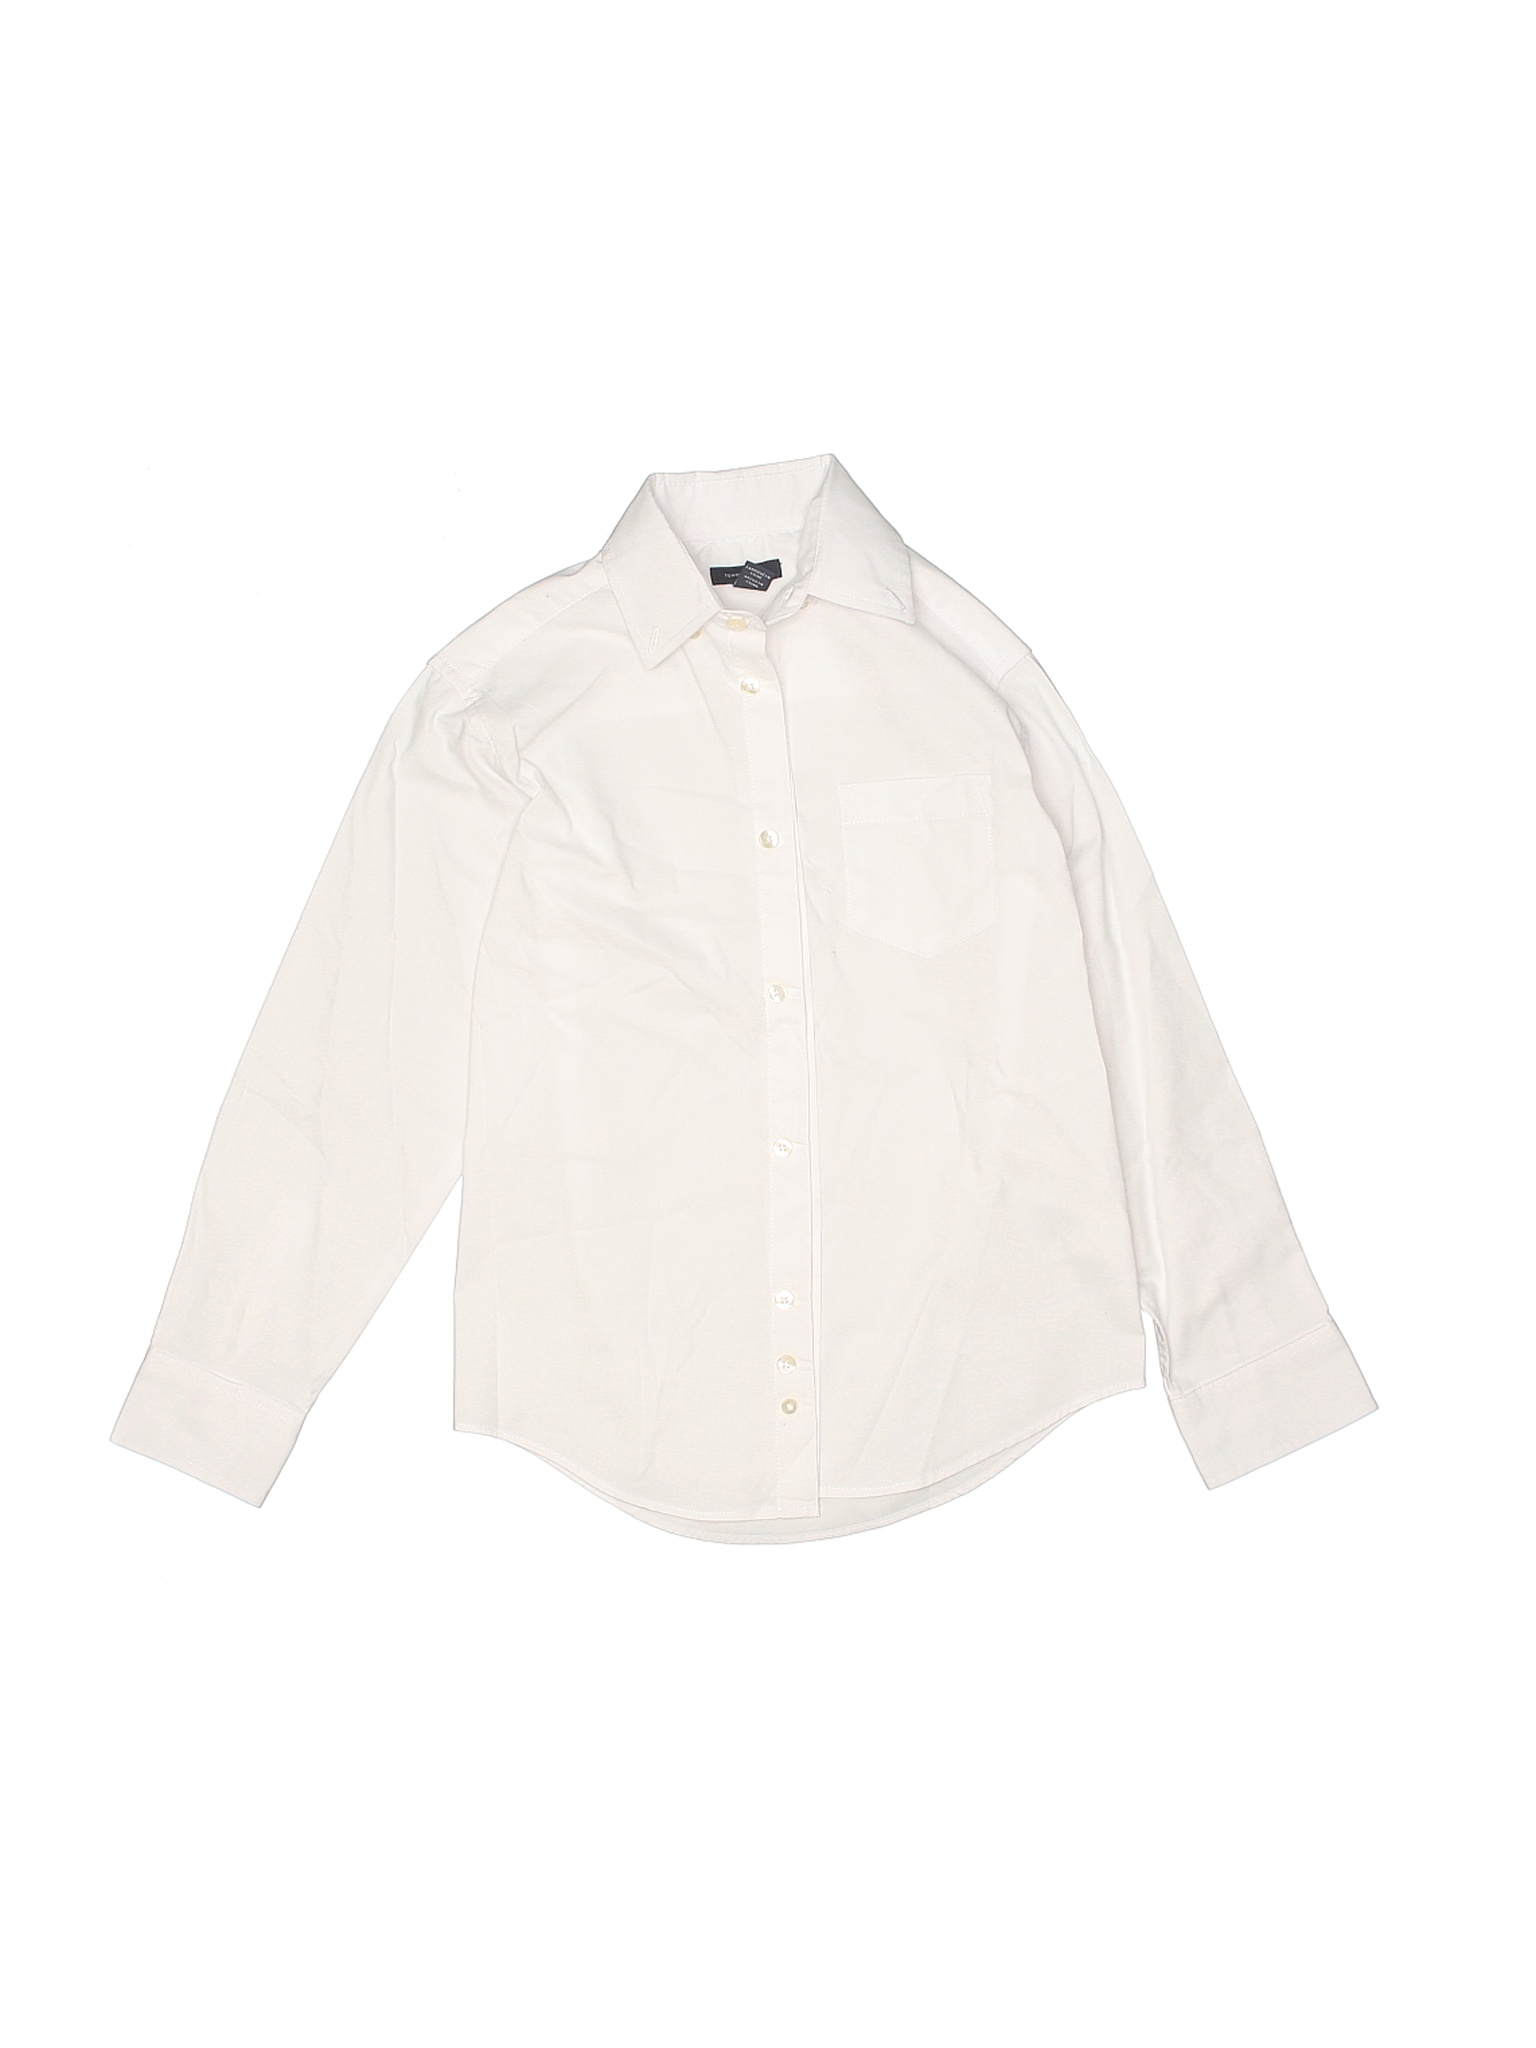 Tommy Hilfiger Boys White Long Sleeve Button-Down Shirt 8 | eBay